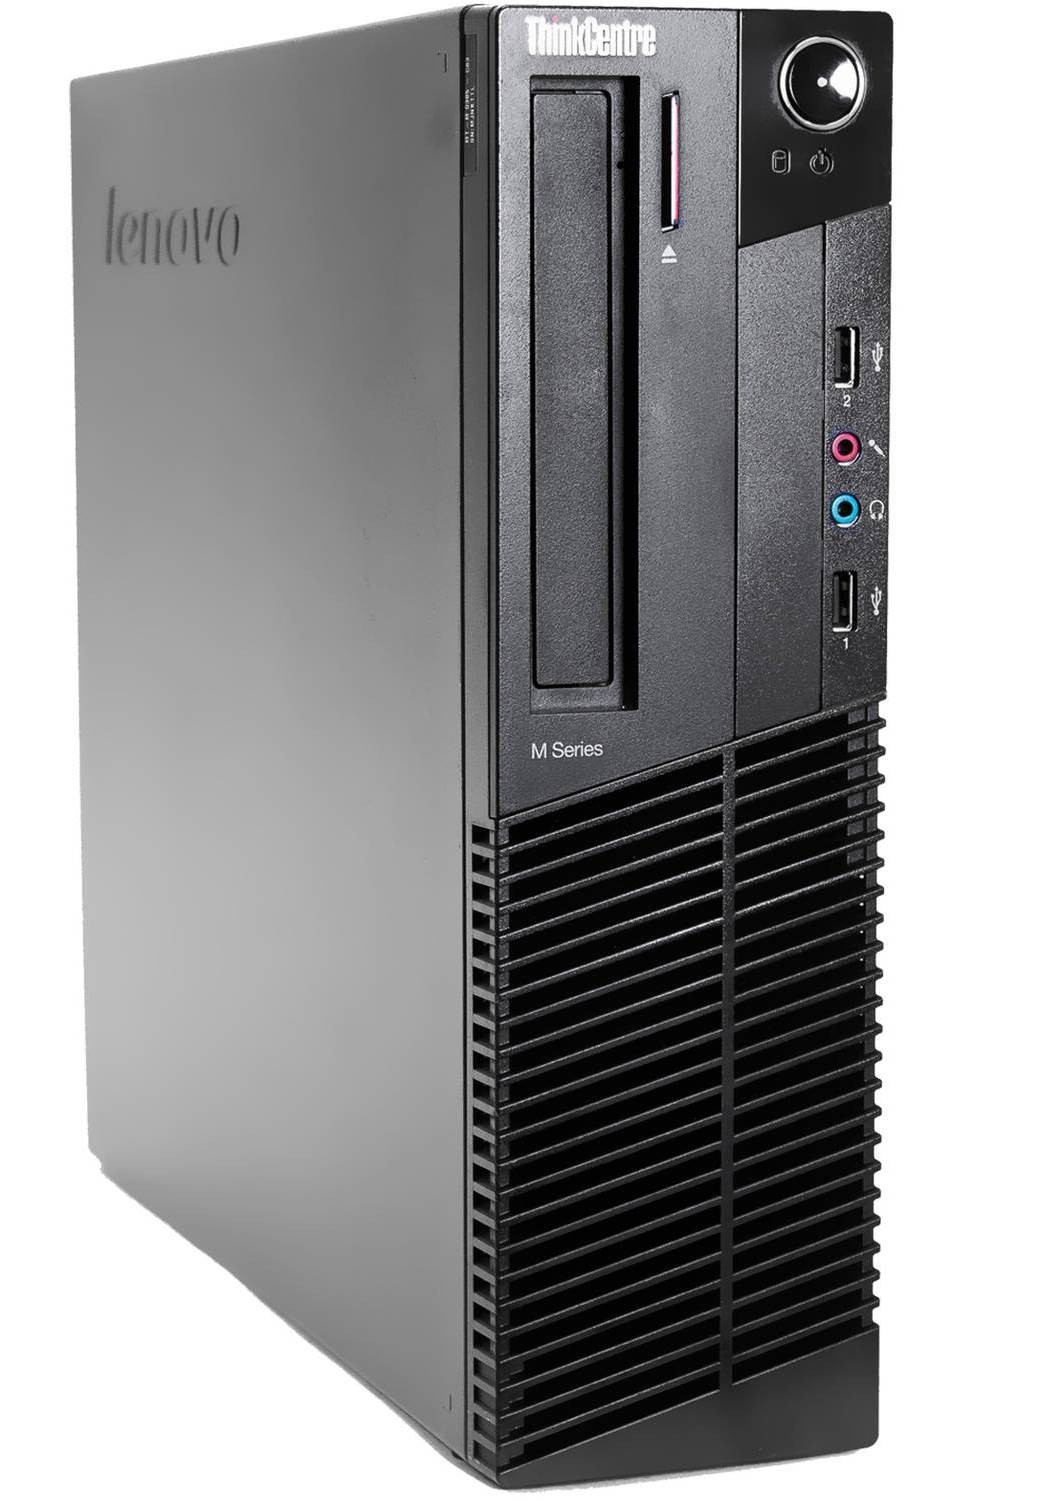 Lenovo ThinkCentre M Series Quad-Core - Lot 870617 | ALLBIDS